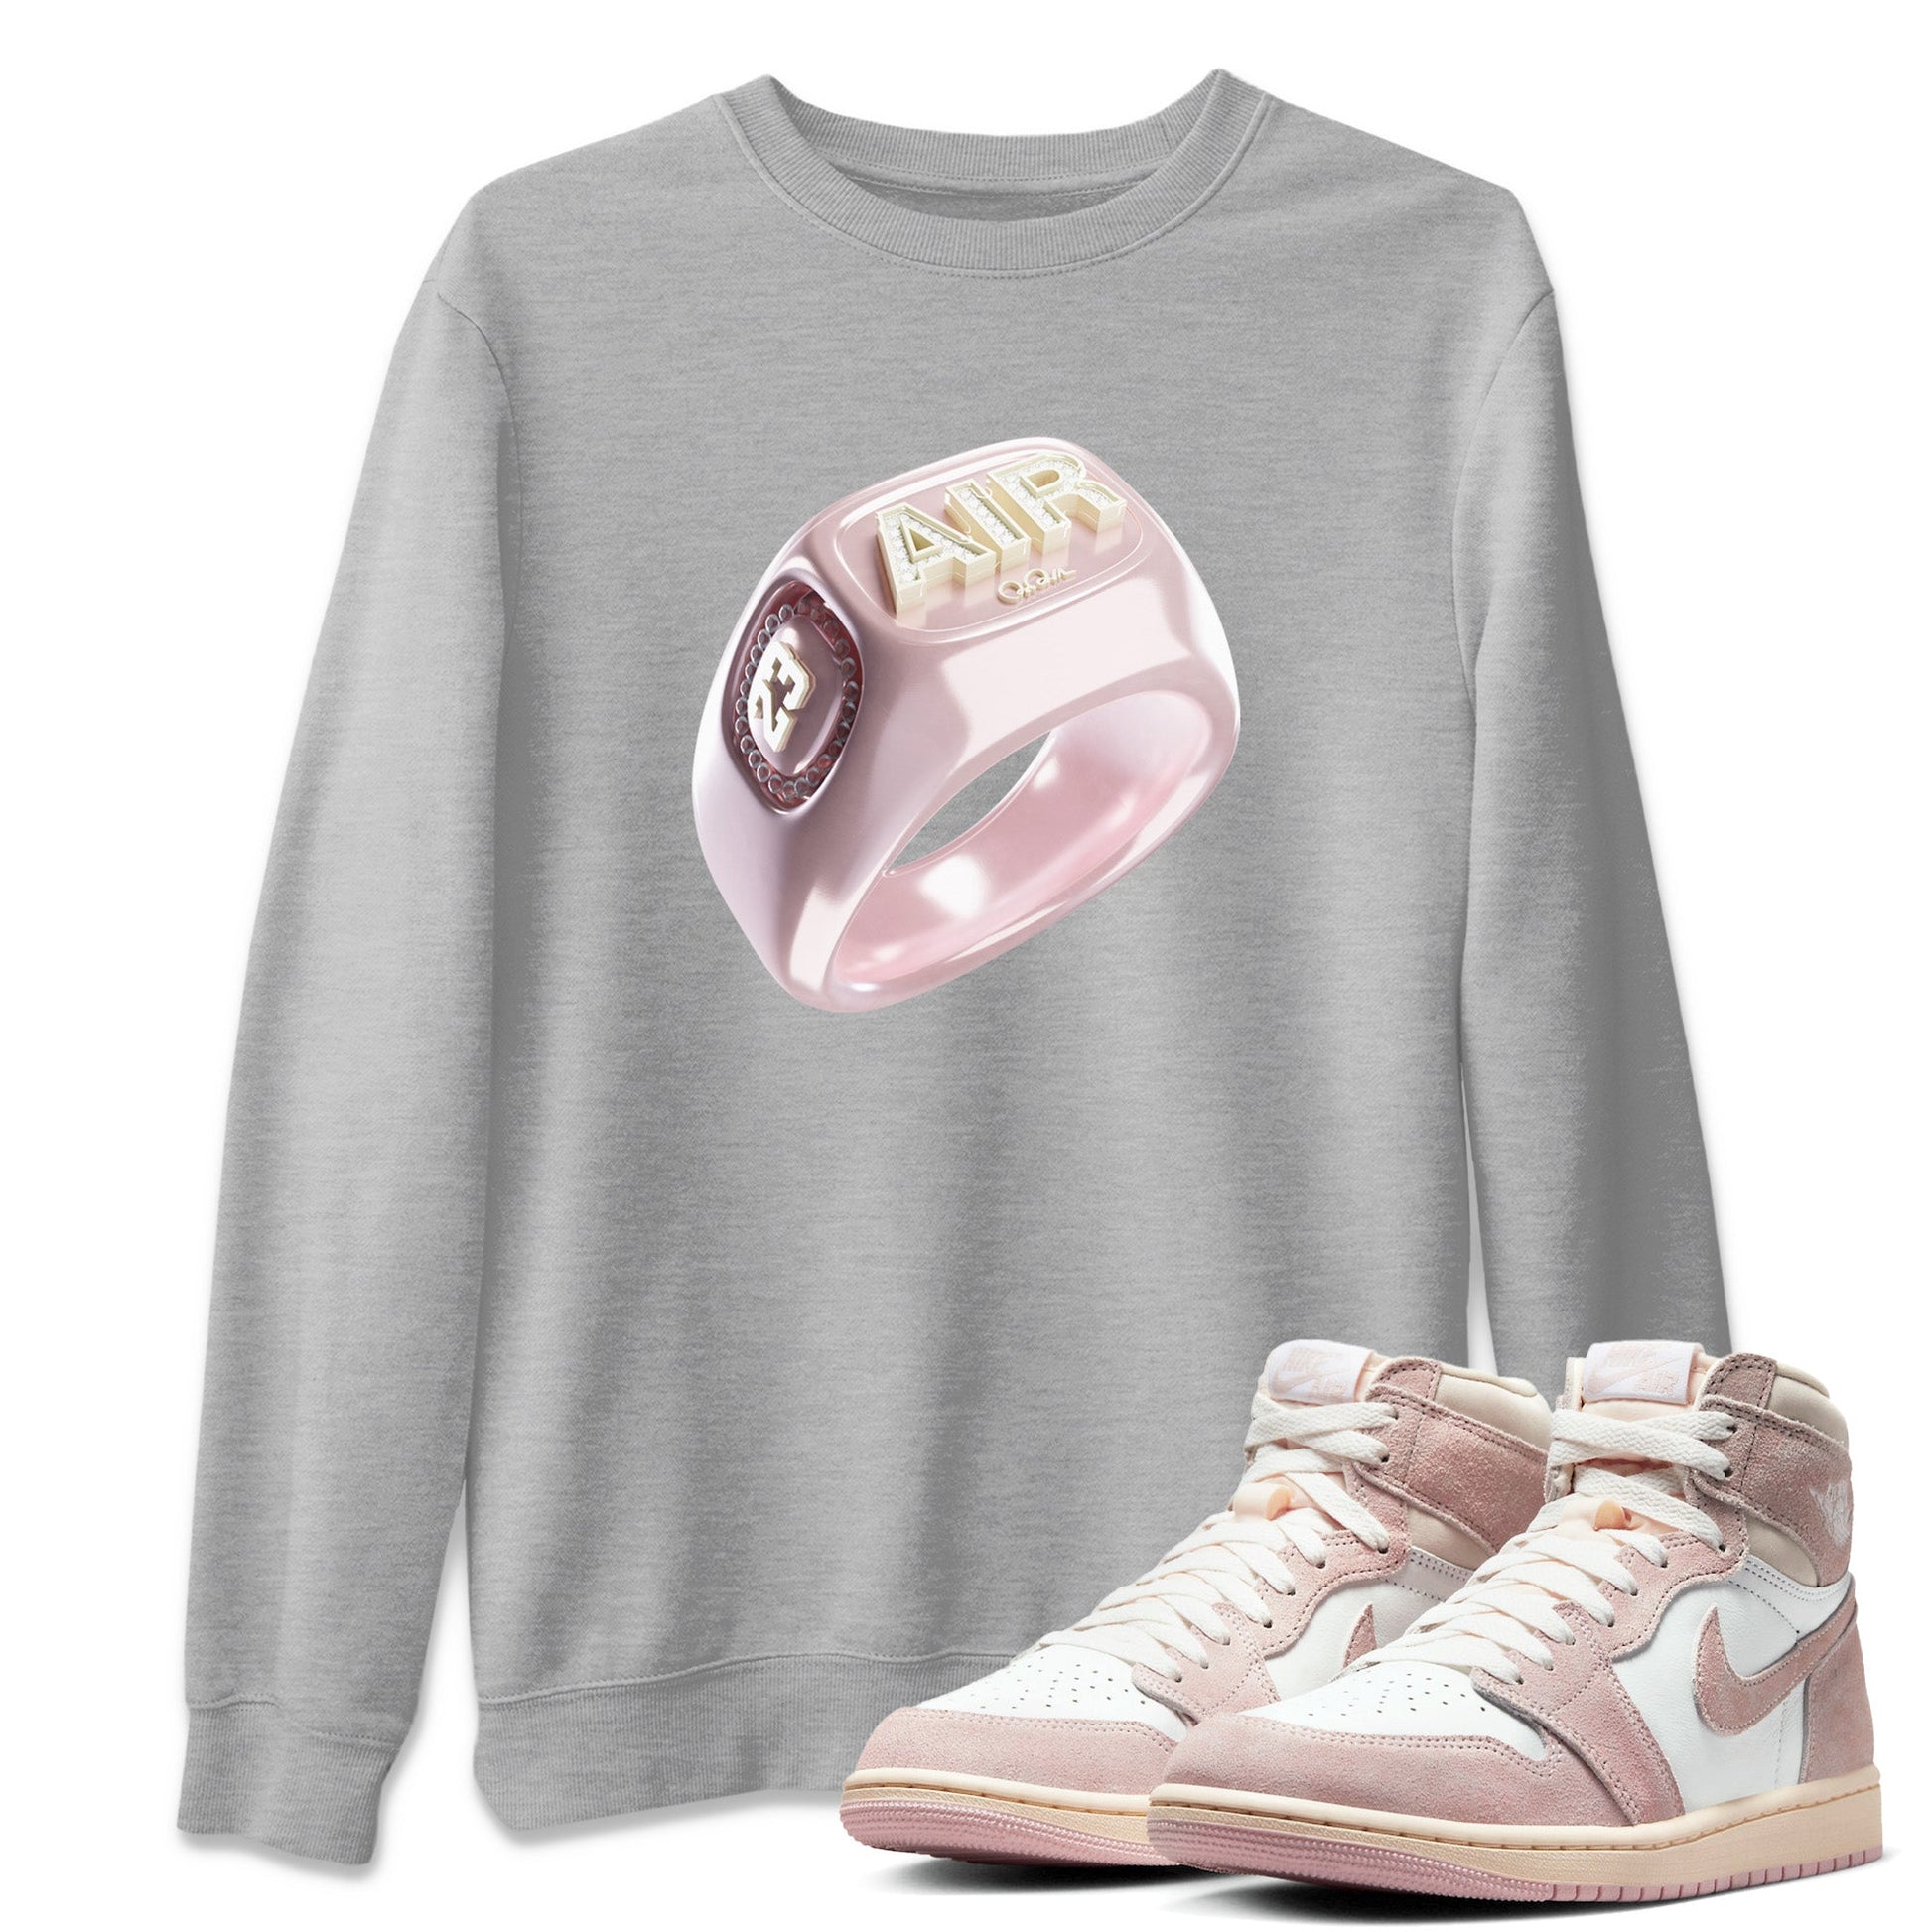 AJ1 Retro High OG Washed Pink Sneaker Tees Drip Gear Zone Diamond Ring Sneaker Tees AJ1 Retro High OG Washed Pink Shirt Unisex Shirts Heather Grey 1